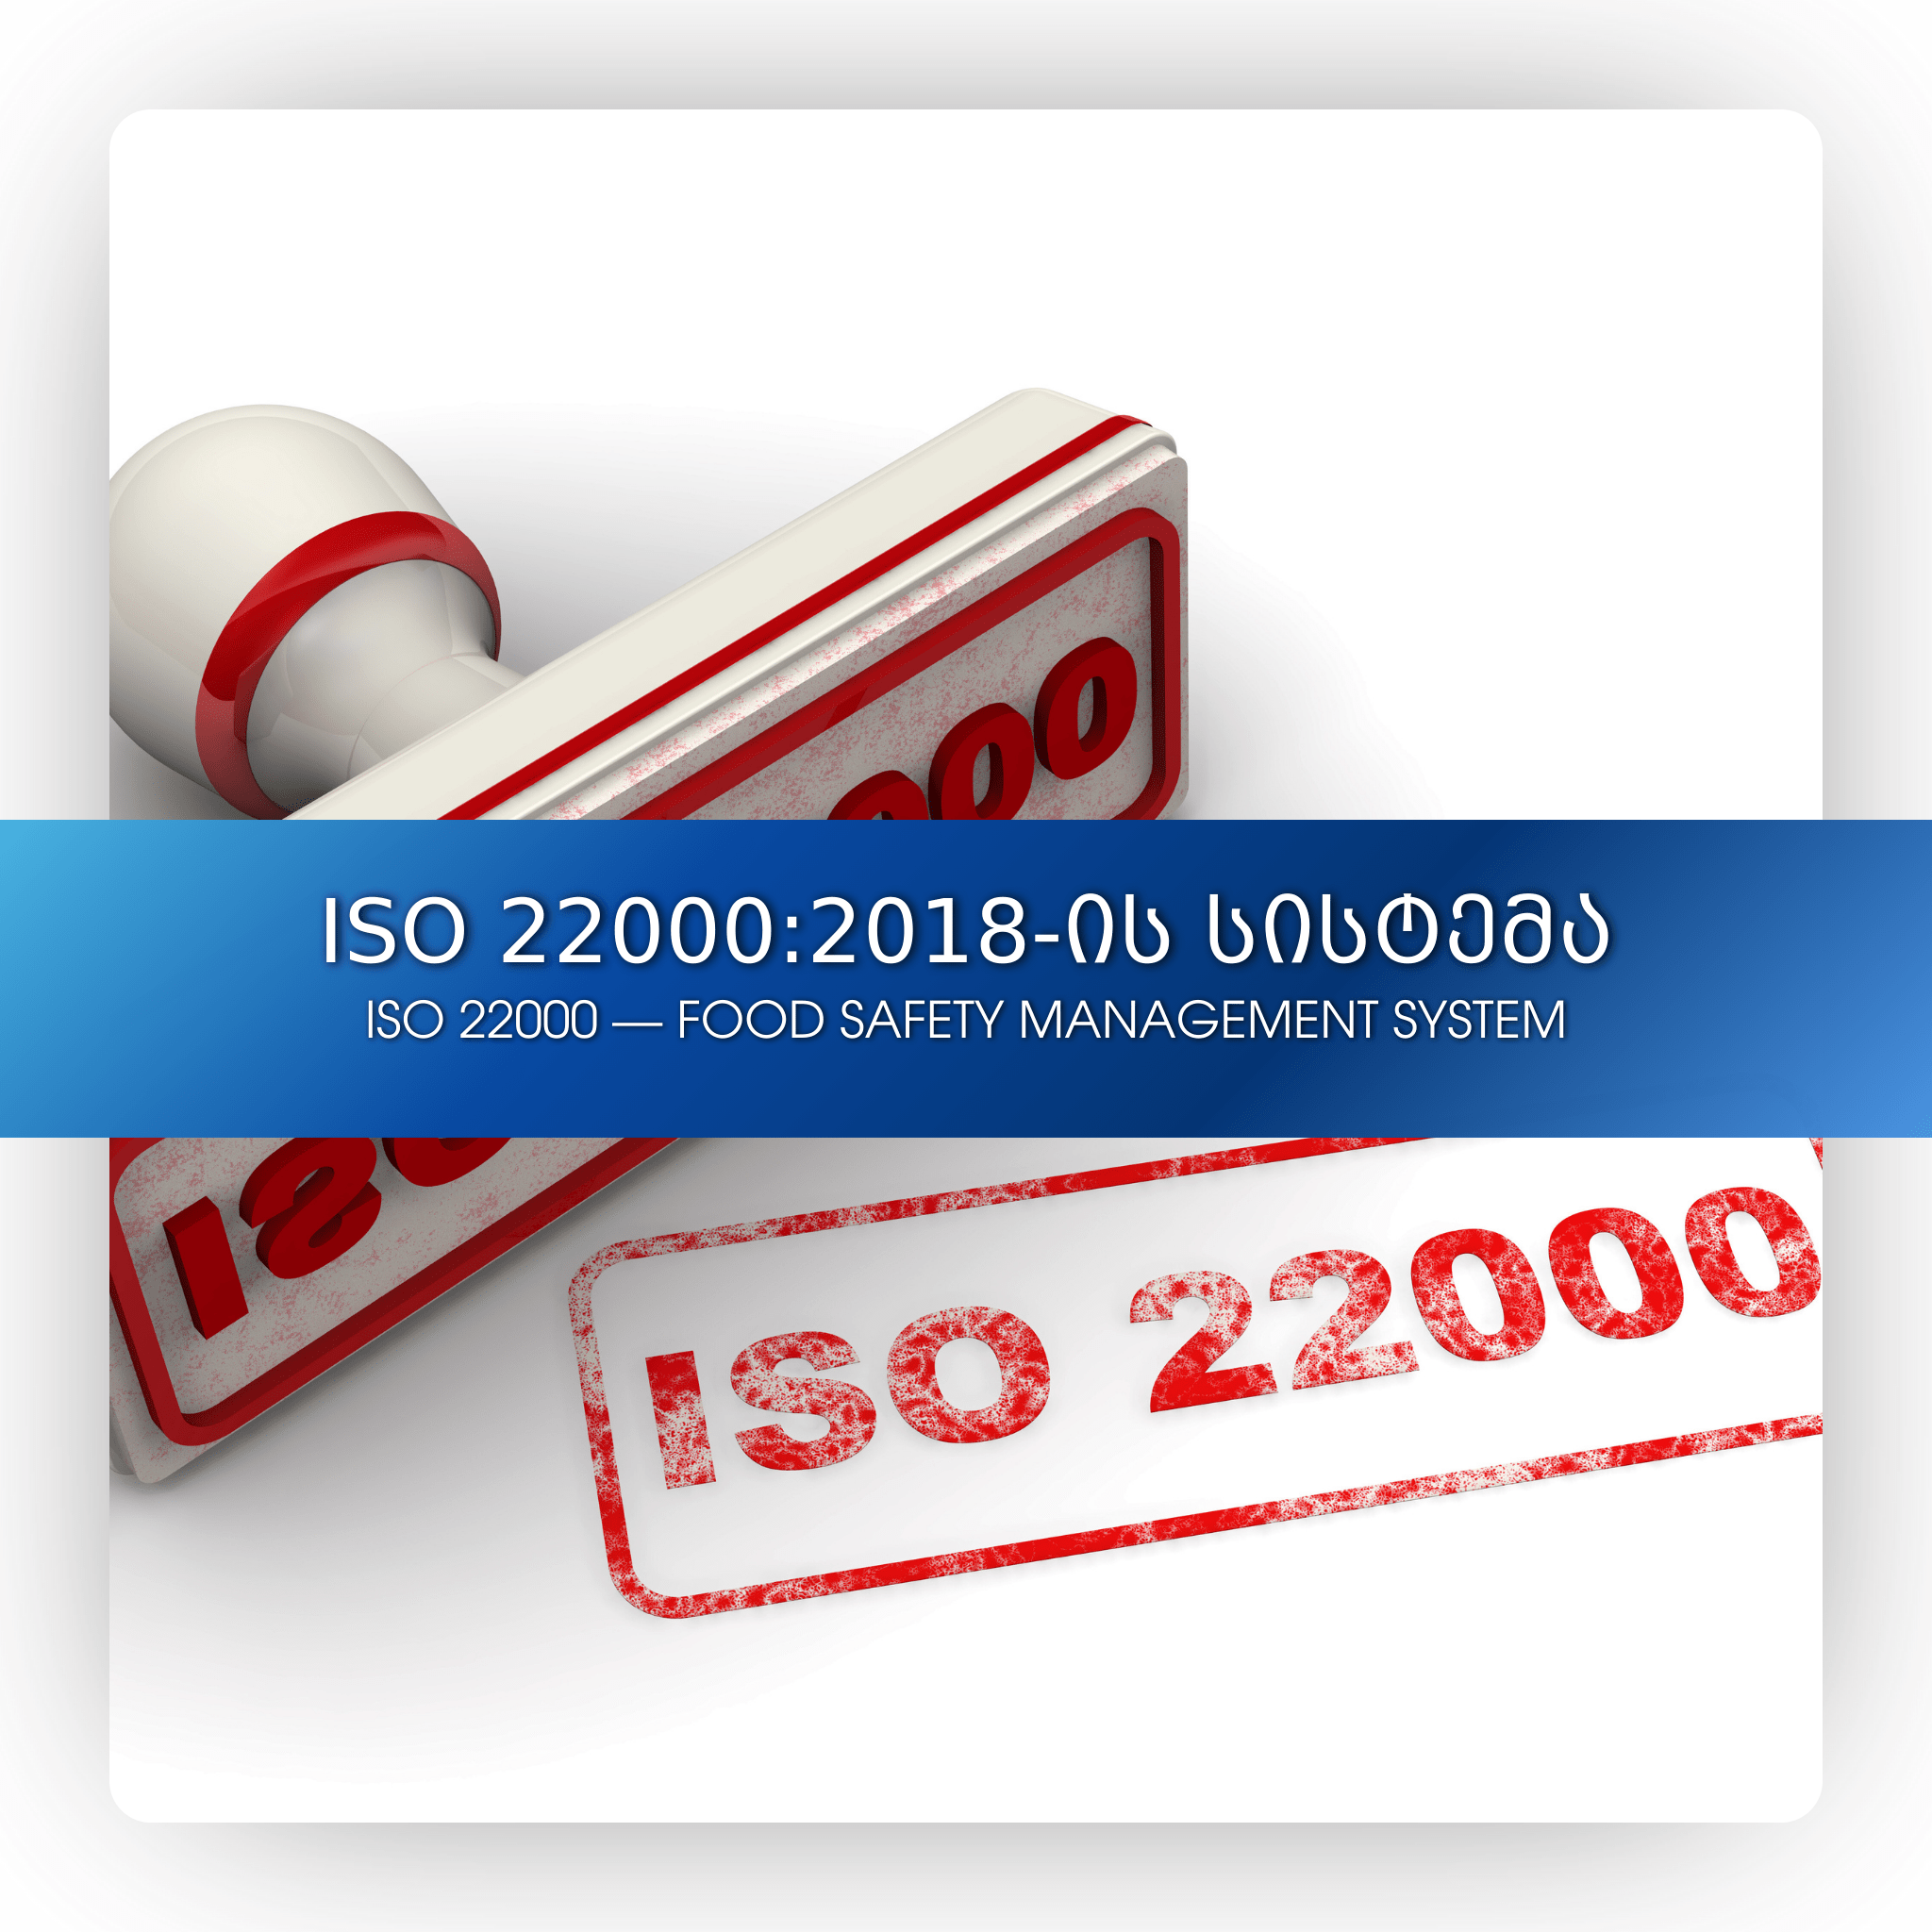 ISO 22000:2018-ის სისტემა